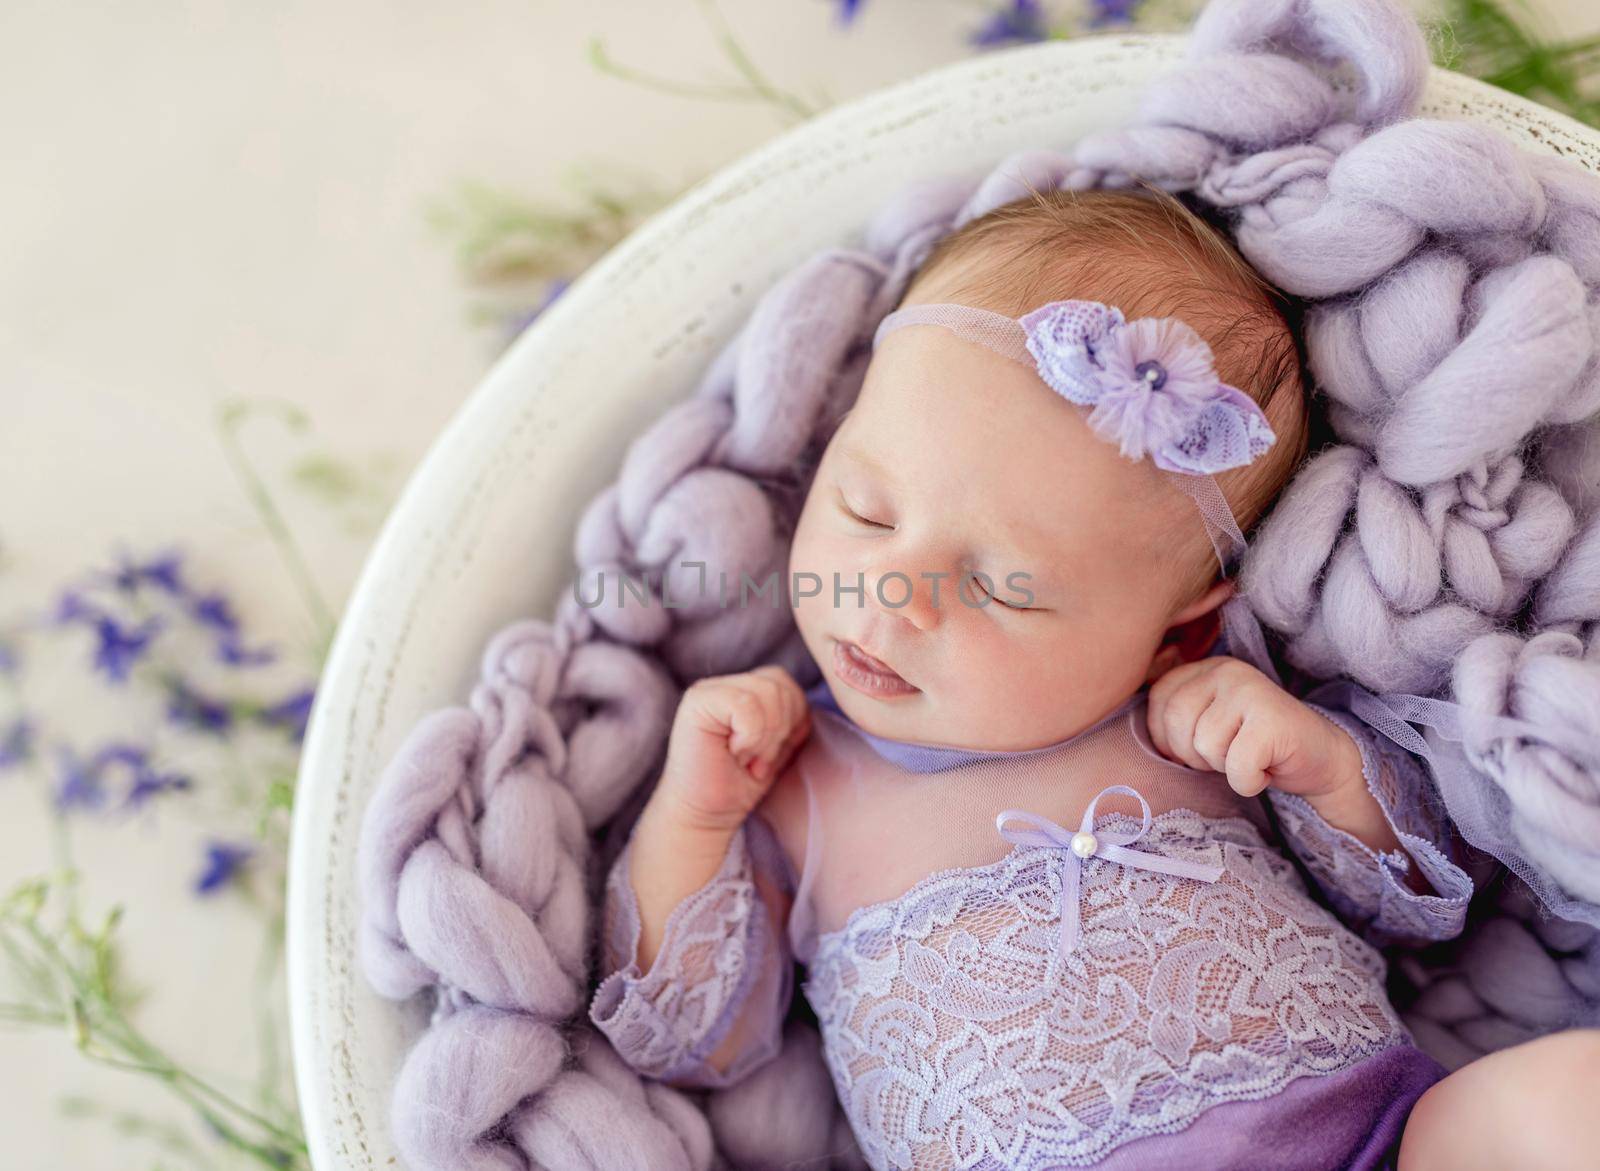 Sleeping newborn baby girl in a pink dress